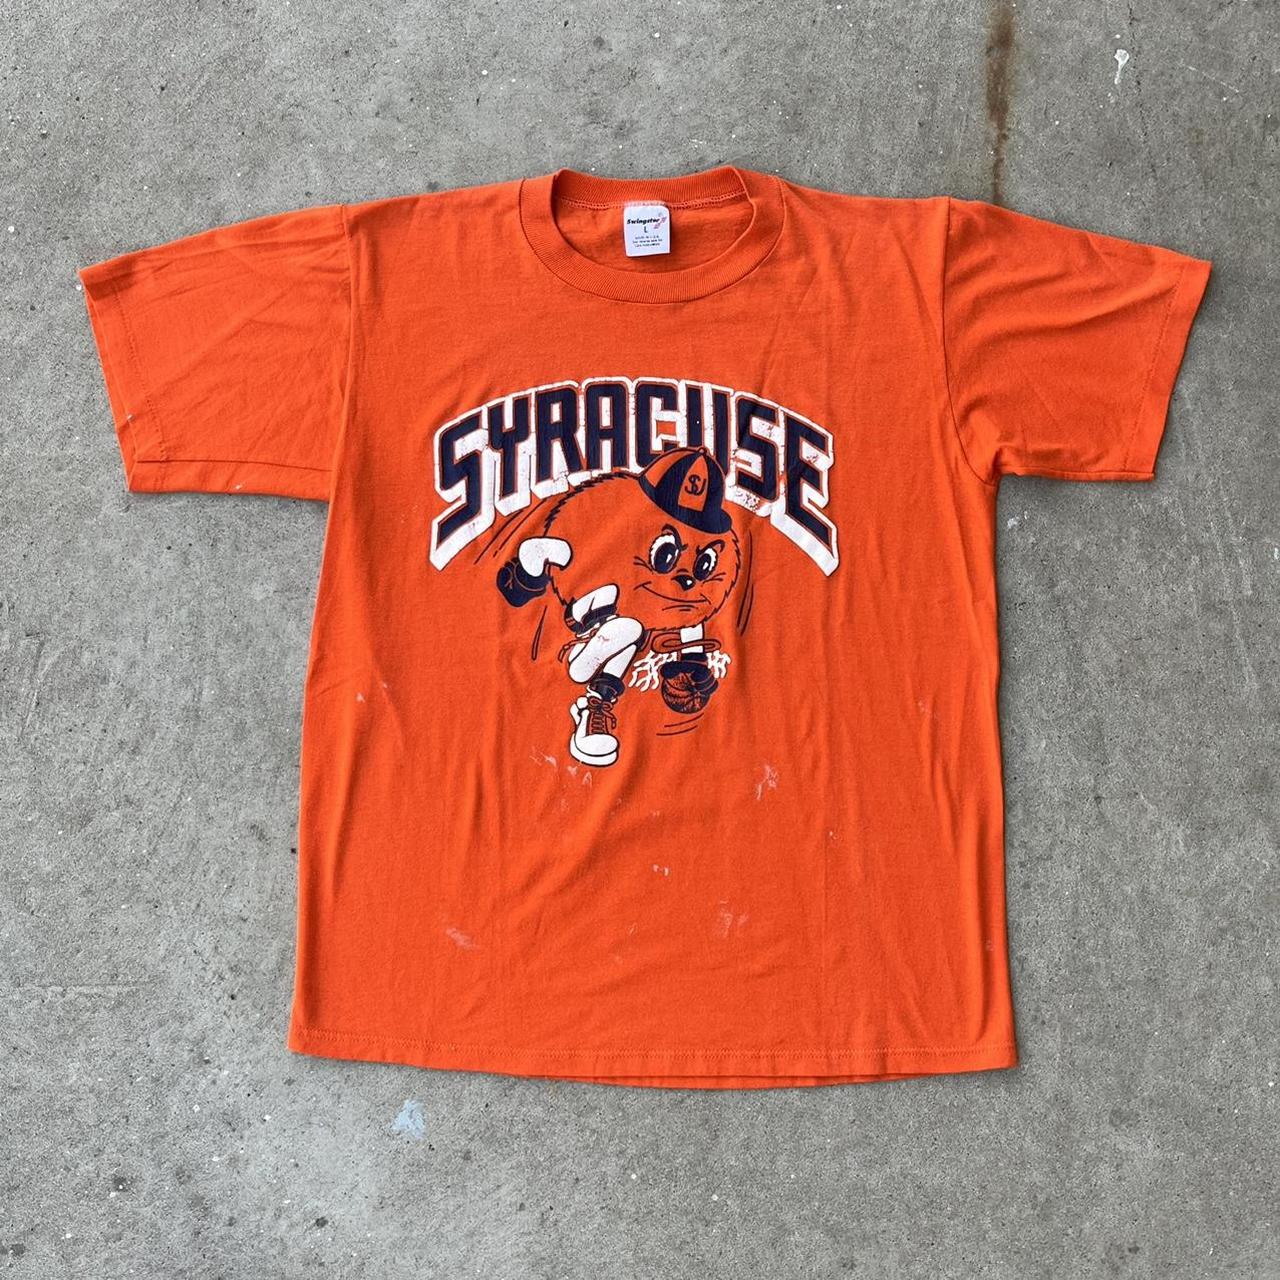 American Vintage Men's T-Shirt - Orange - S